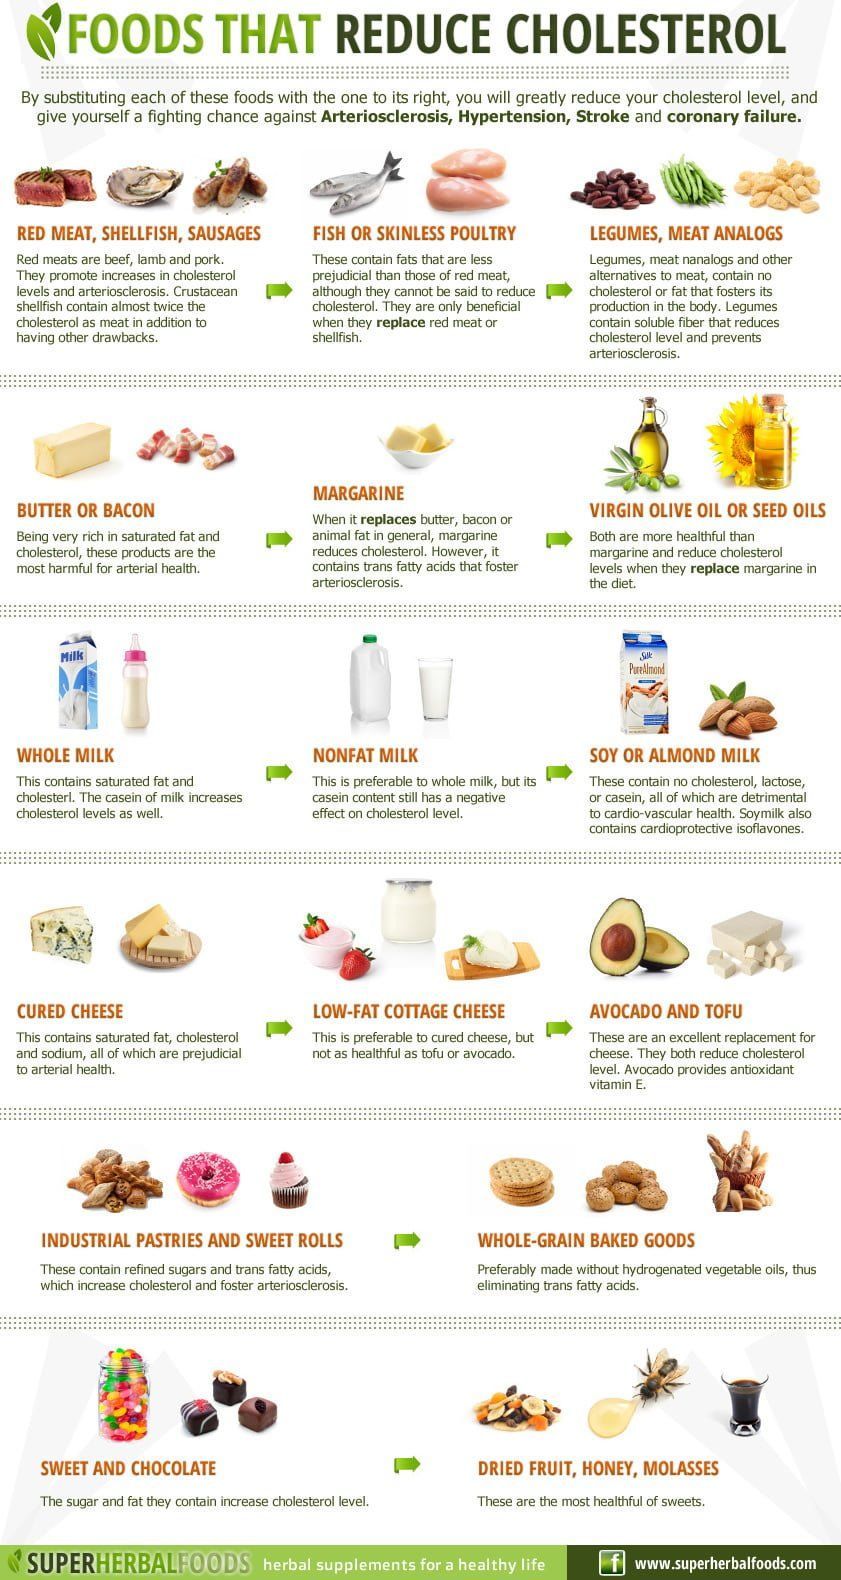 16 fitness Food diet ideas